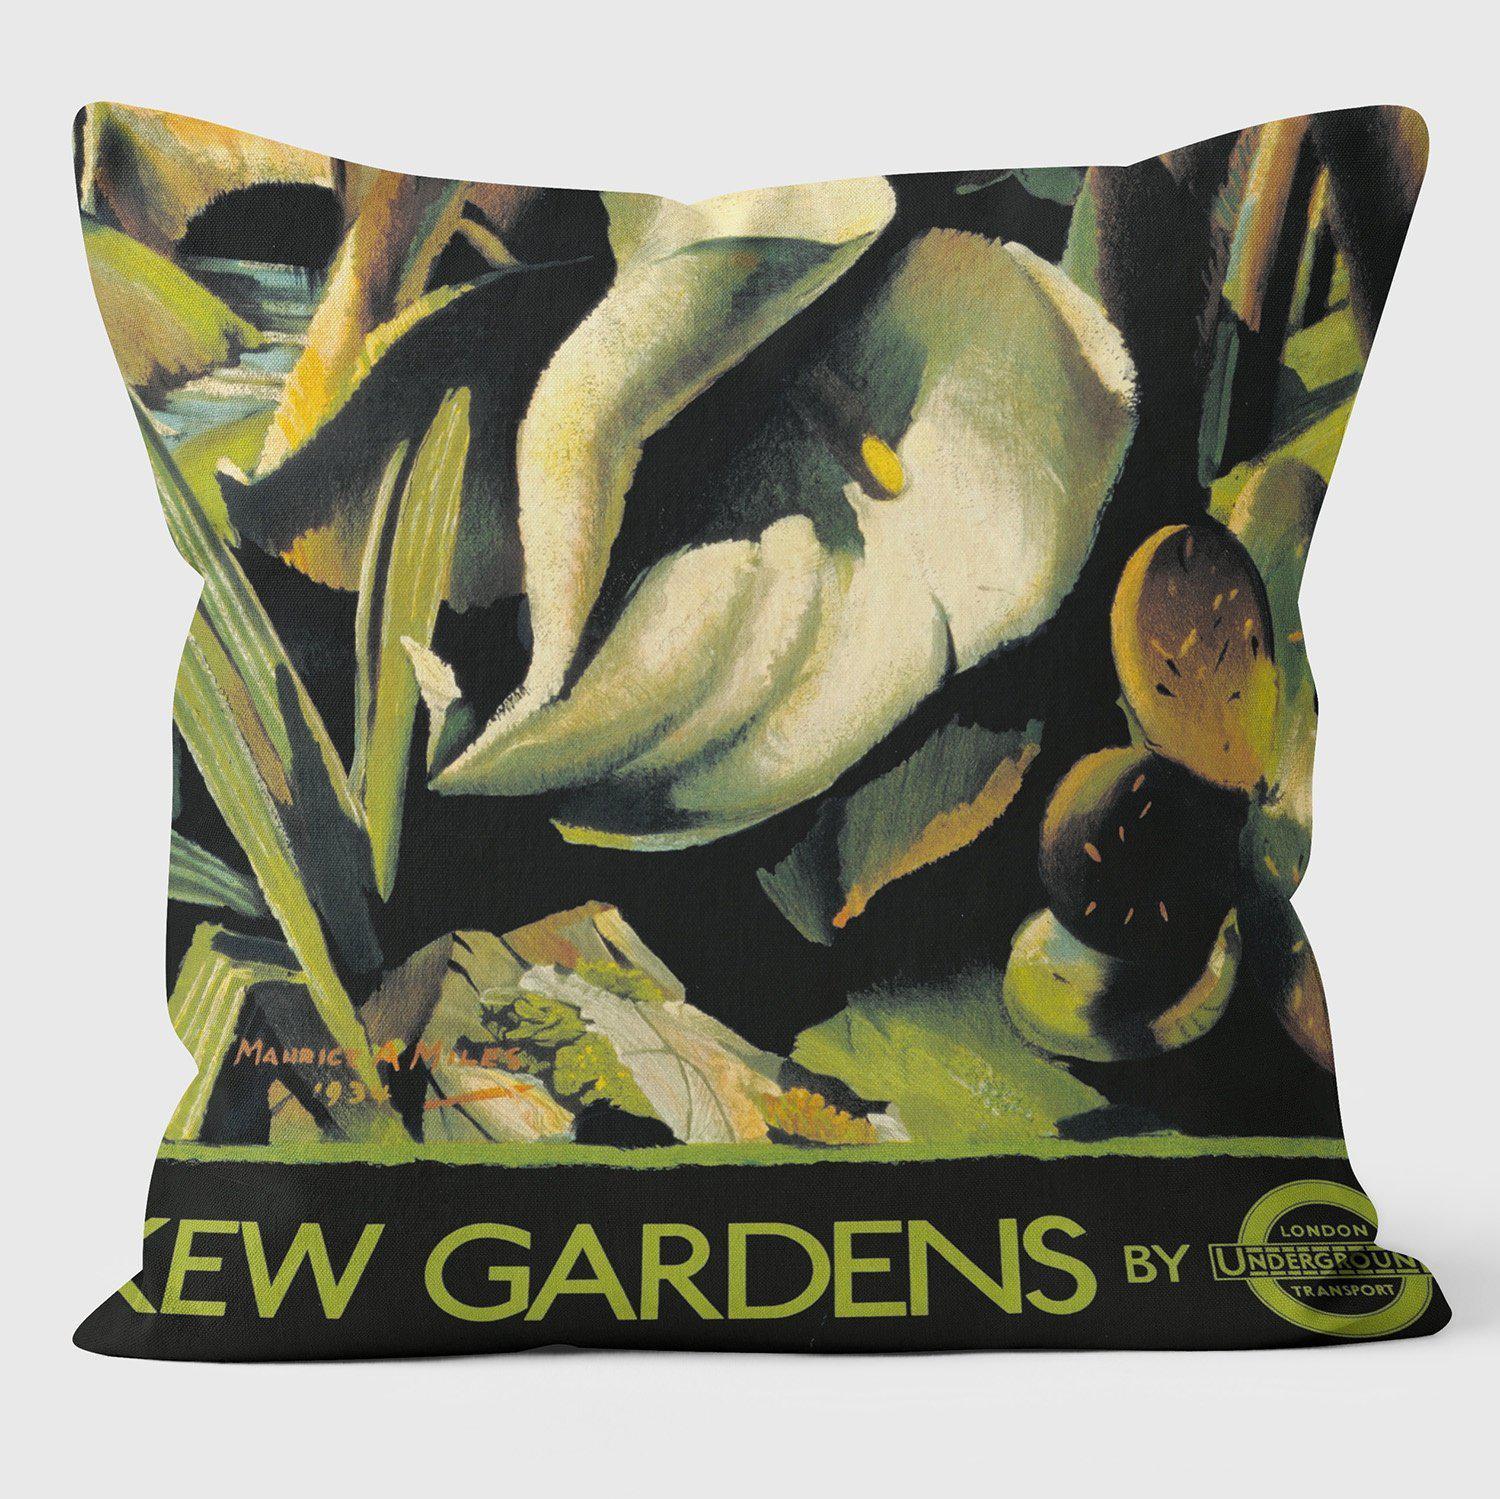 Kew Gardens - London Transport Cushion - Handmade Cushions UK - WeLoveCushions